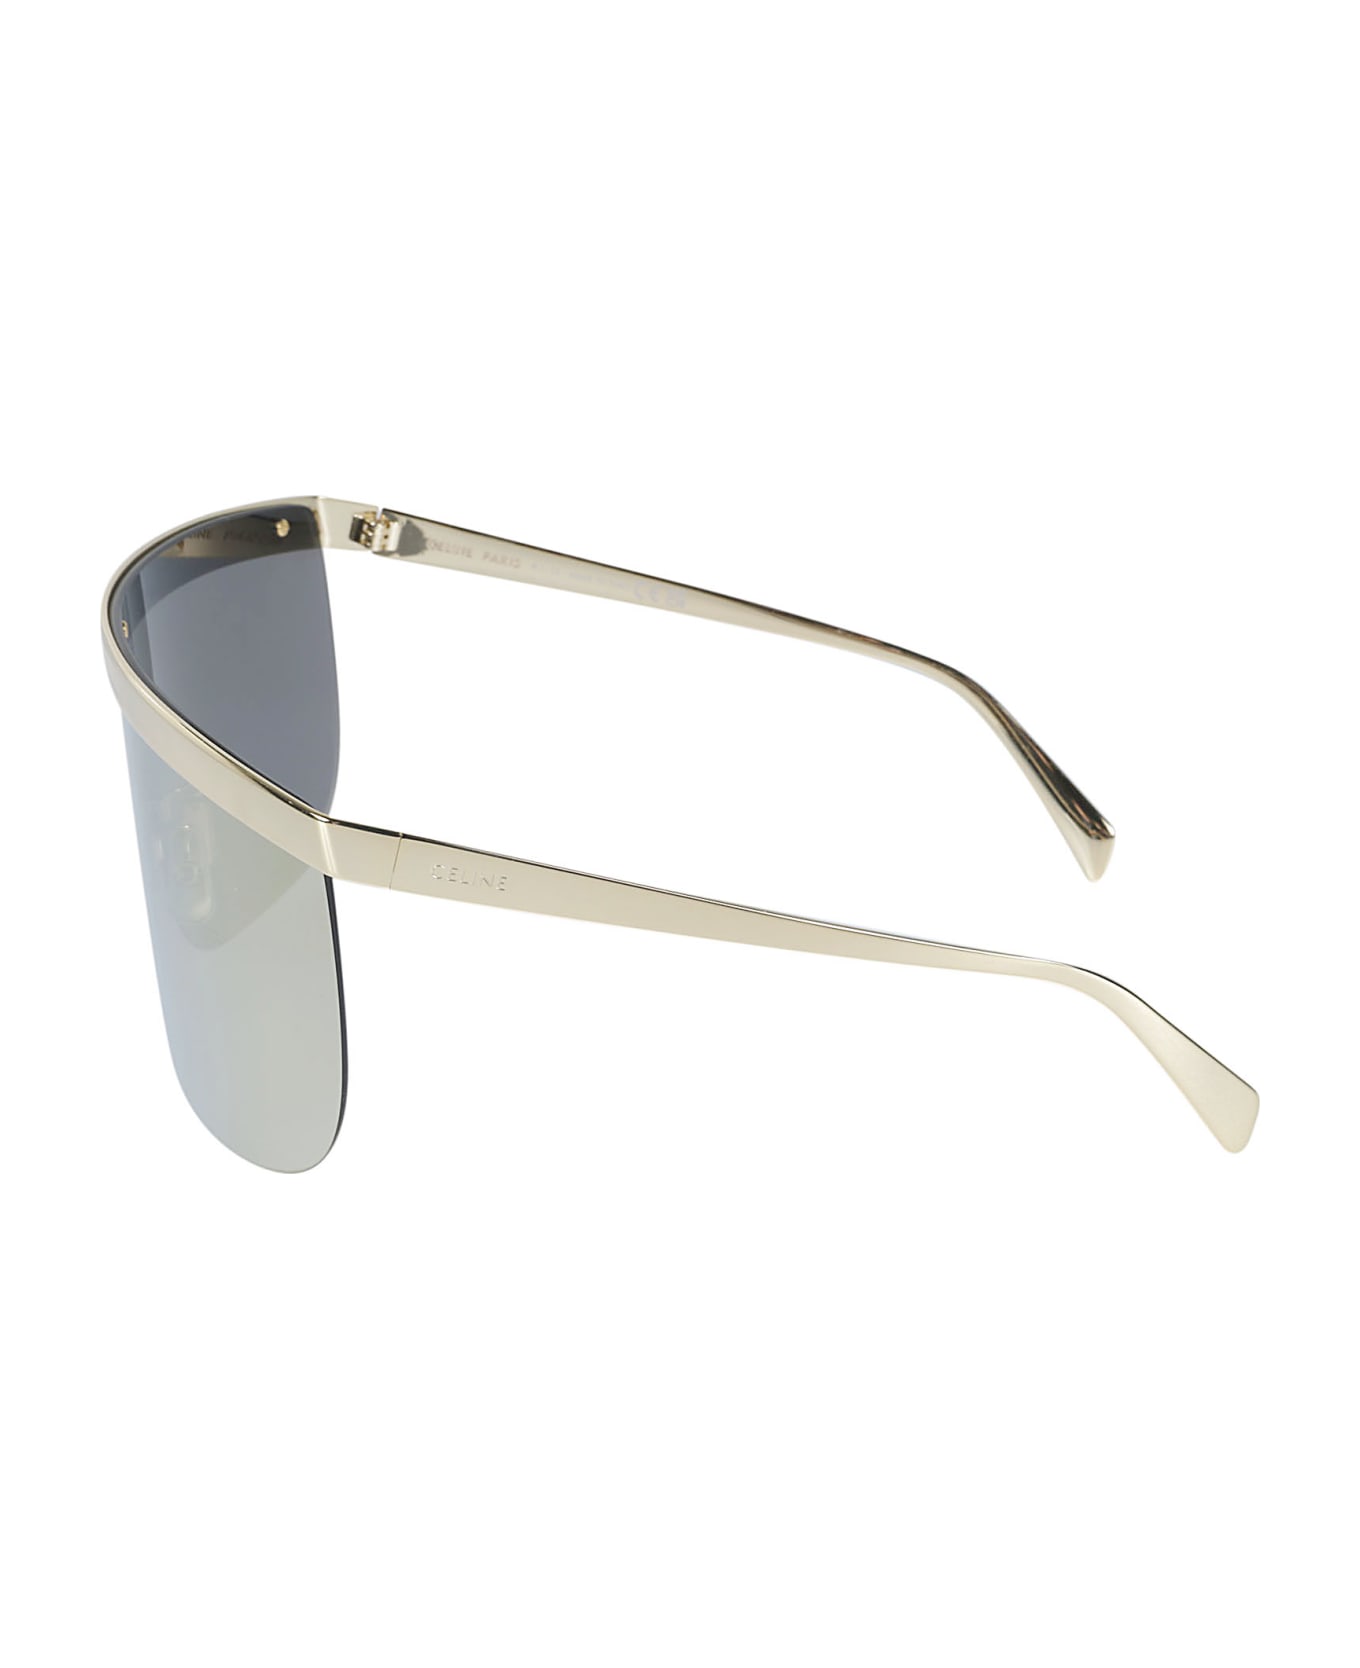 Celine Metallic Shield Sunglasses Pink - Nero